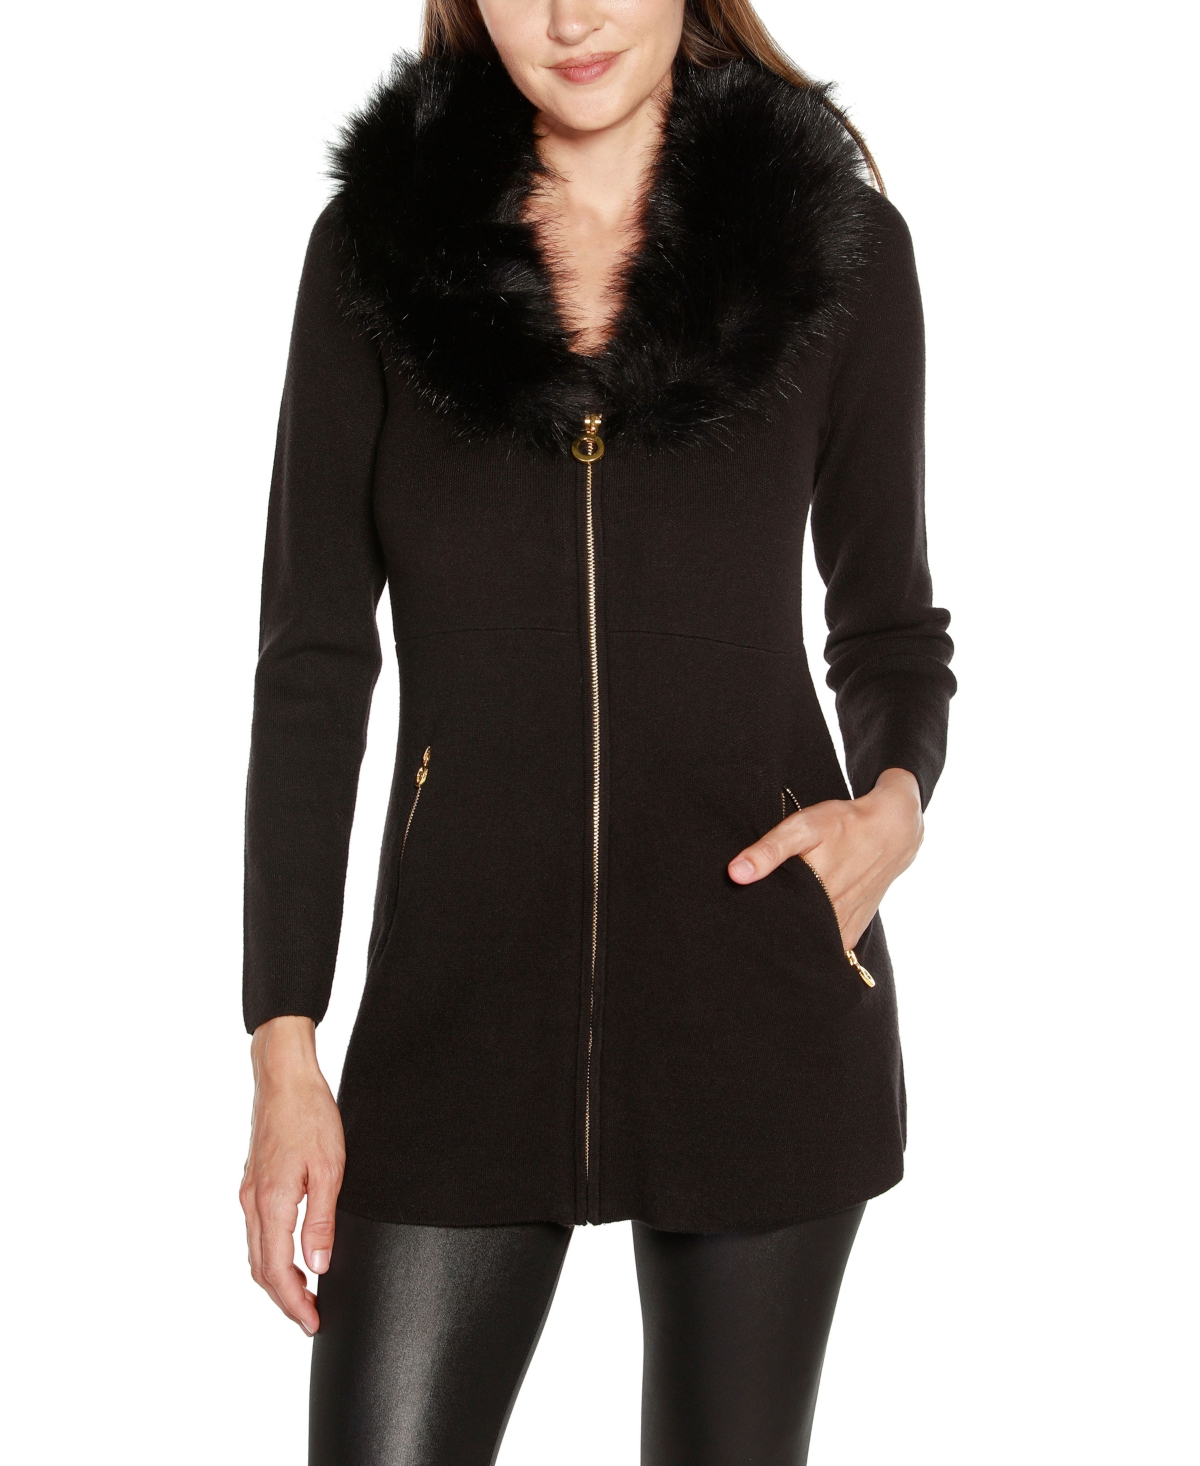 Black Label Women's Faux Fur Collar Cardigan Sweater - Black, Black